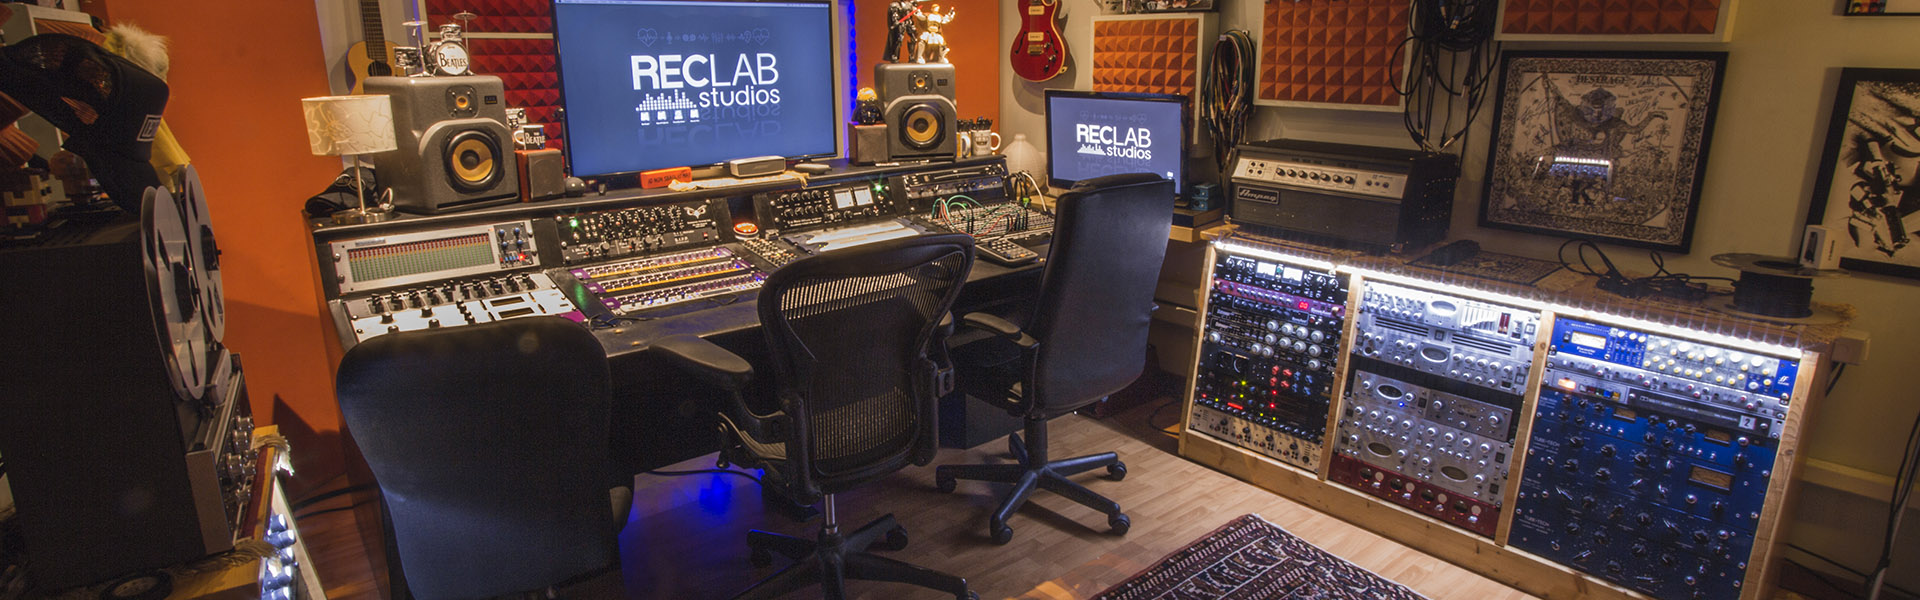 RecLab Studios rec lab studio recording mastering mix milano milan